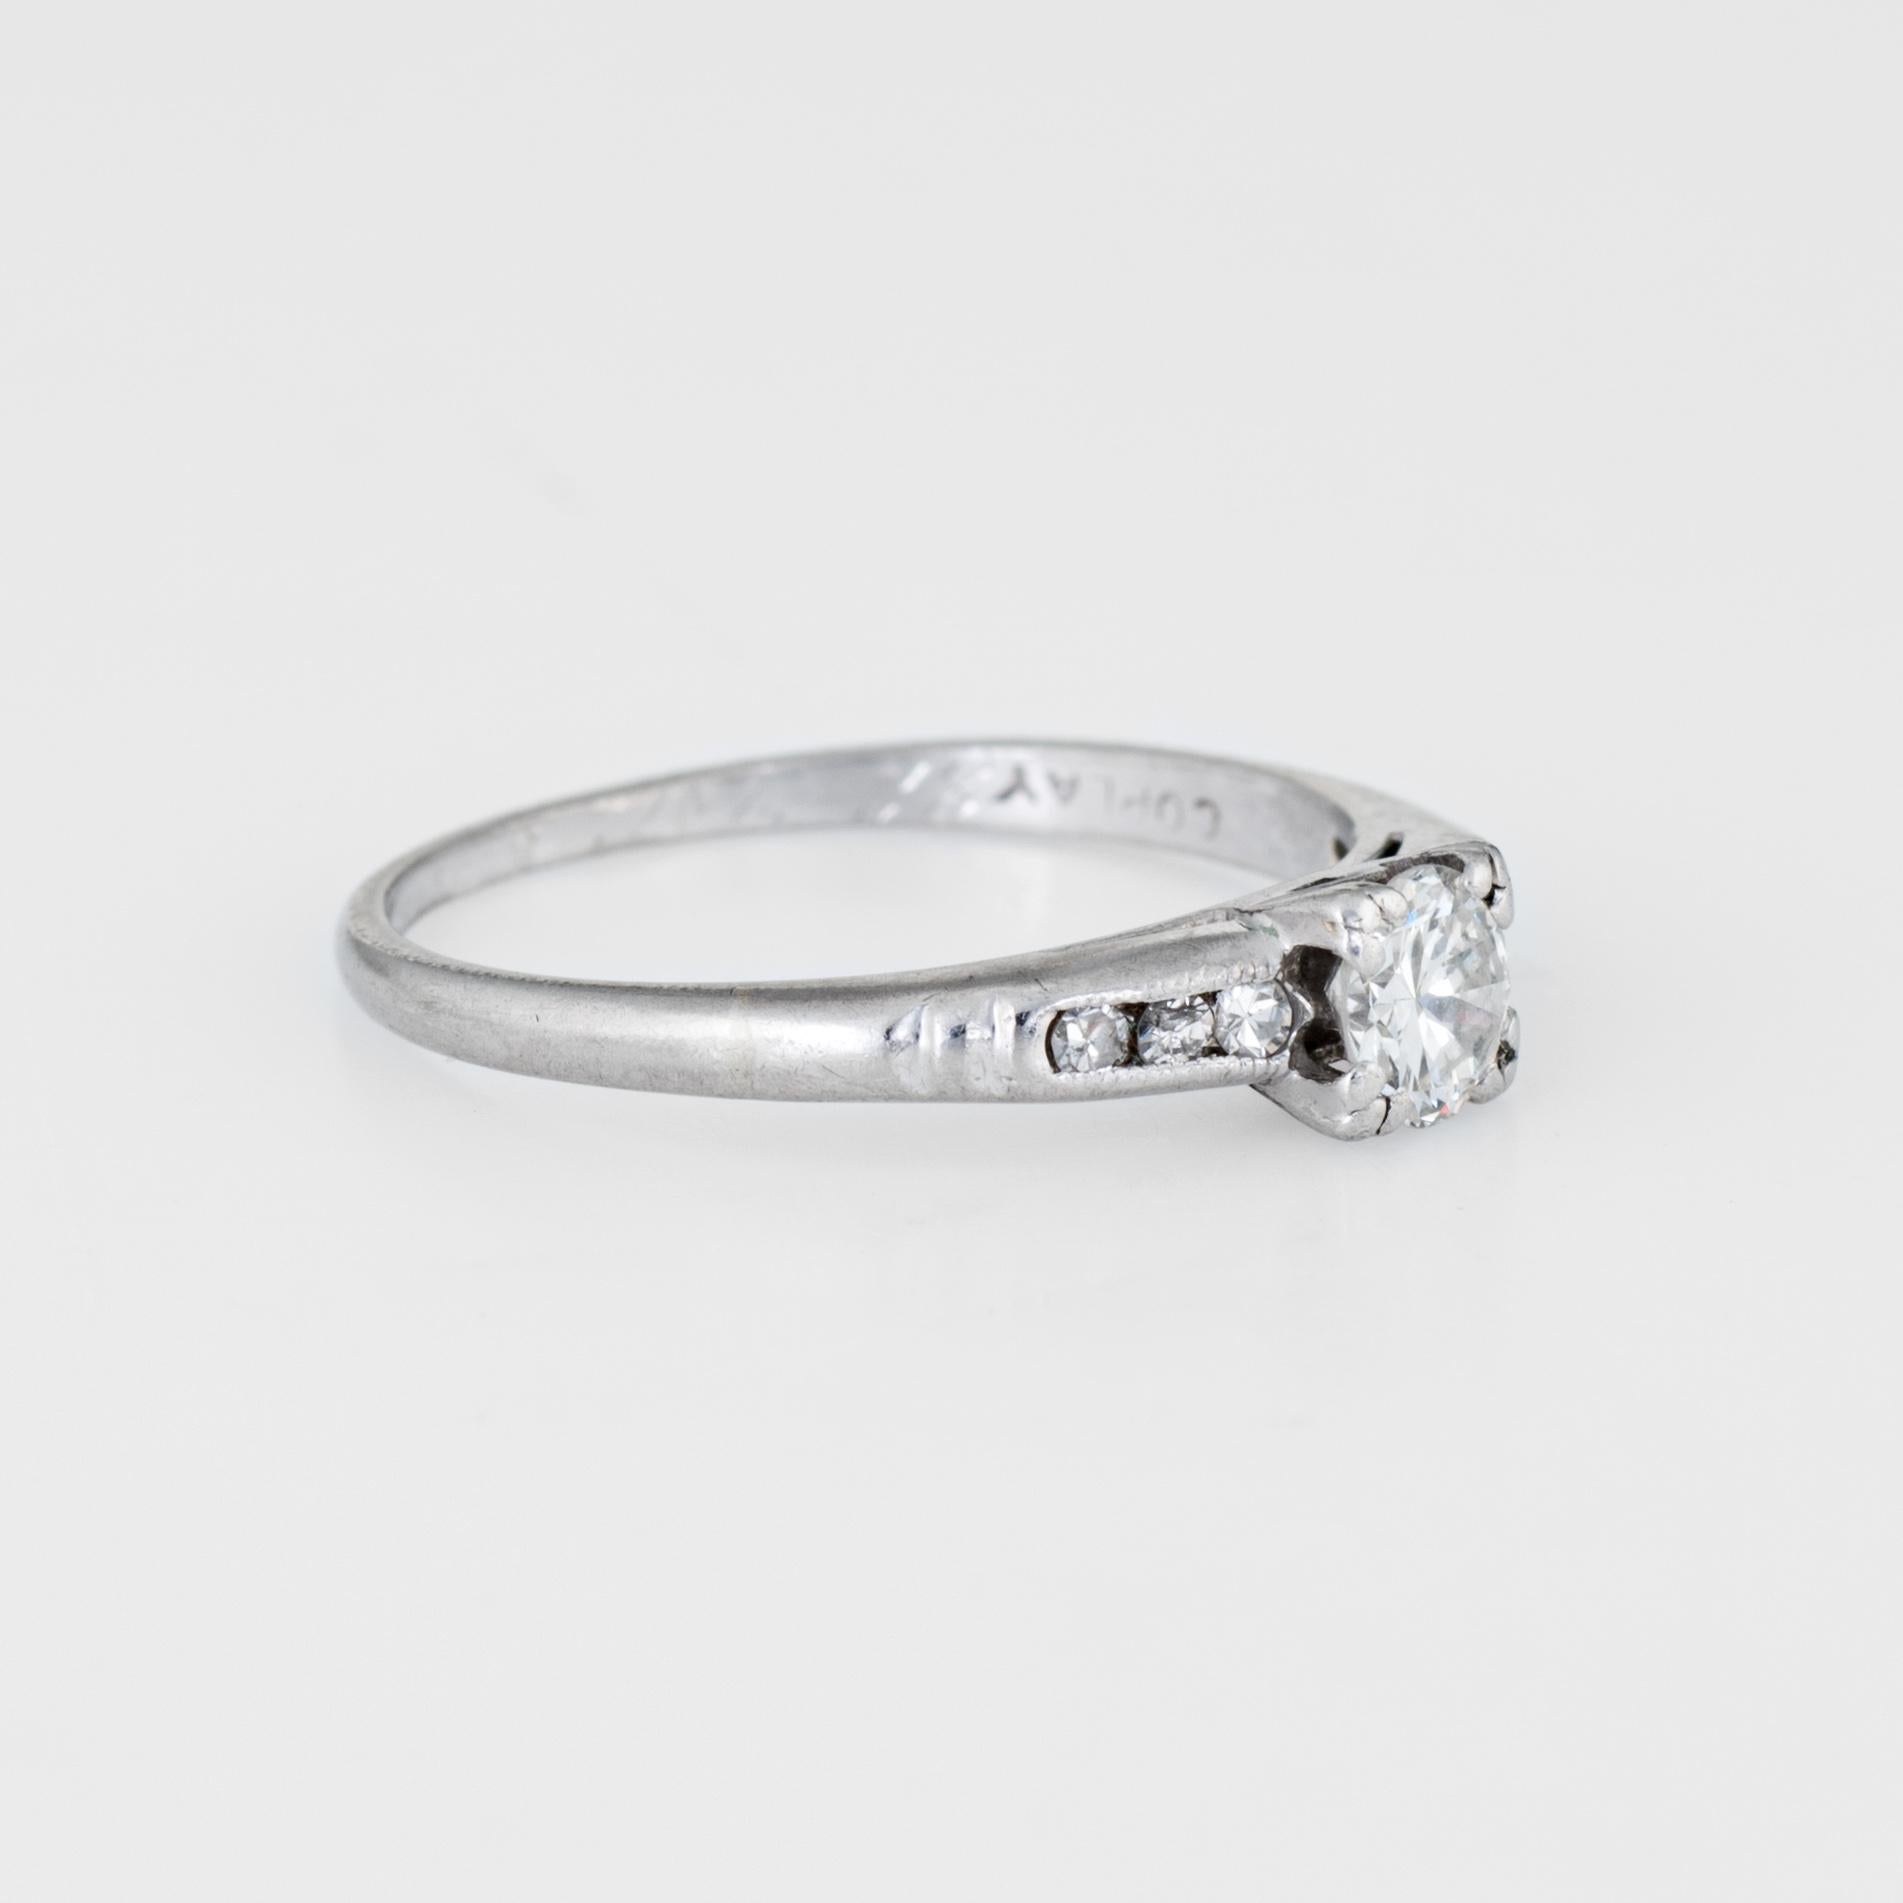 Art Deco Antique Deco Diamond Ring Platinum Engagement Vintage Fine Jewelry Bridal